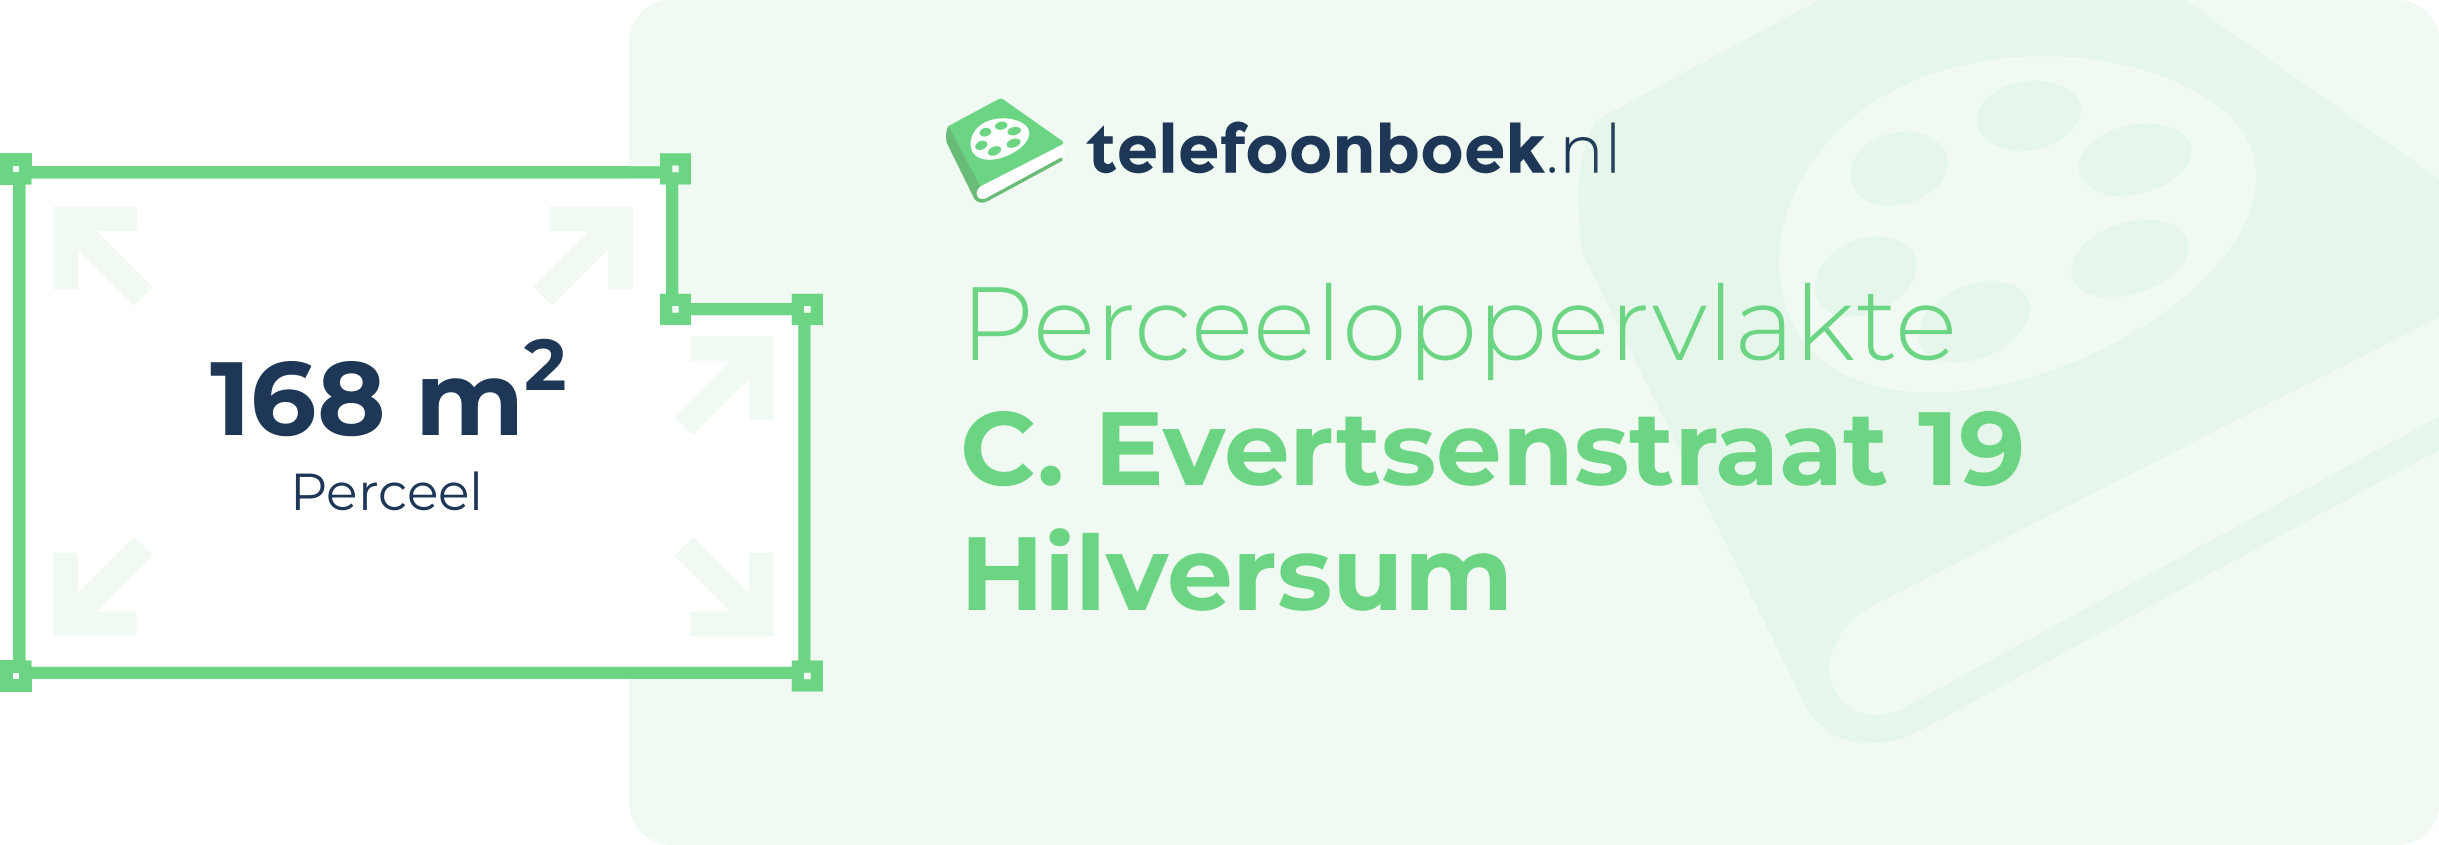 Perceeloppervlakte C. Evertsenstraat 19 Hilversum